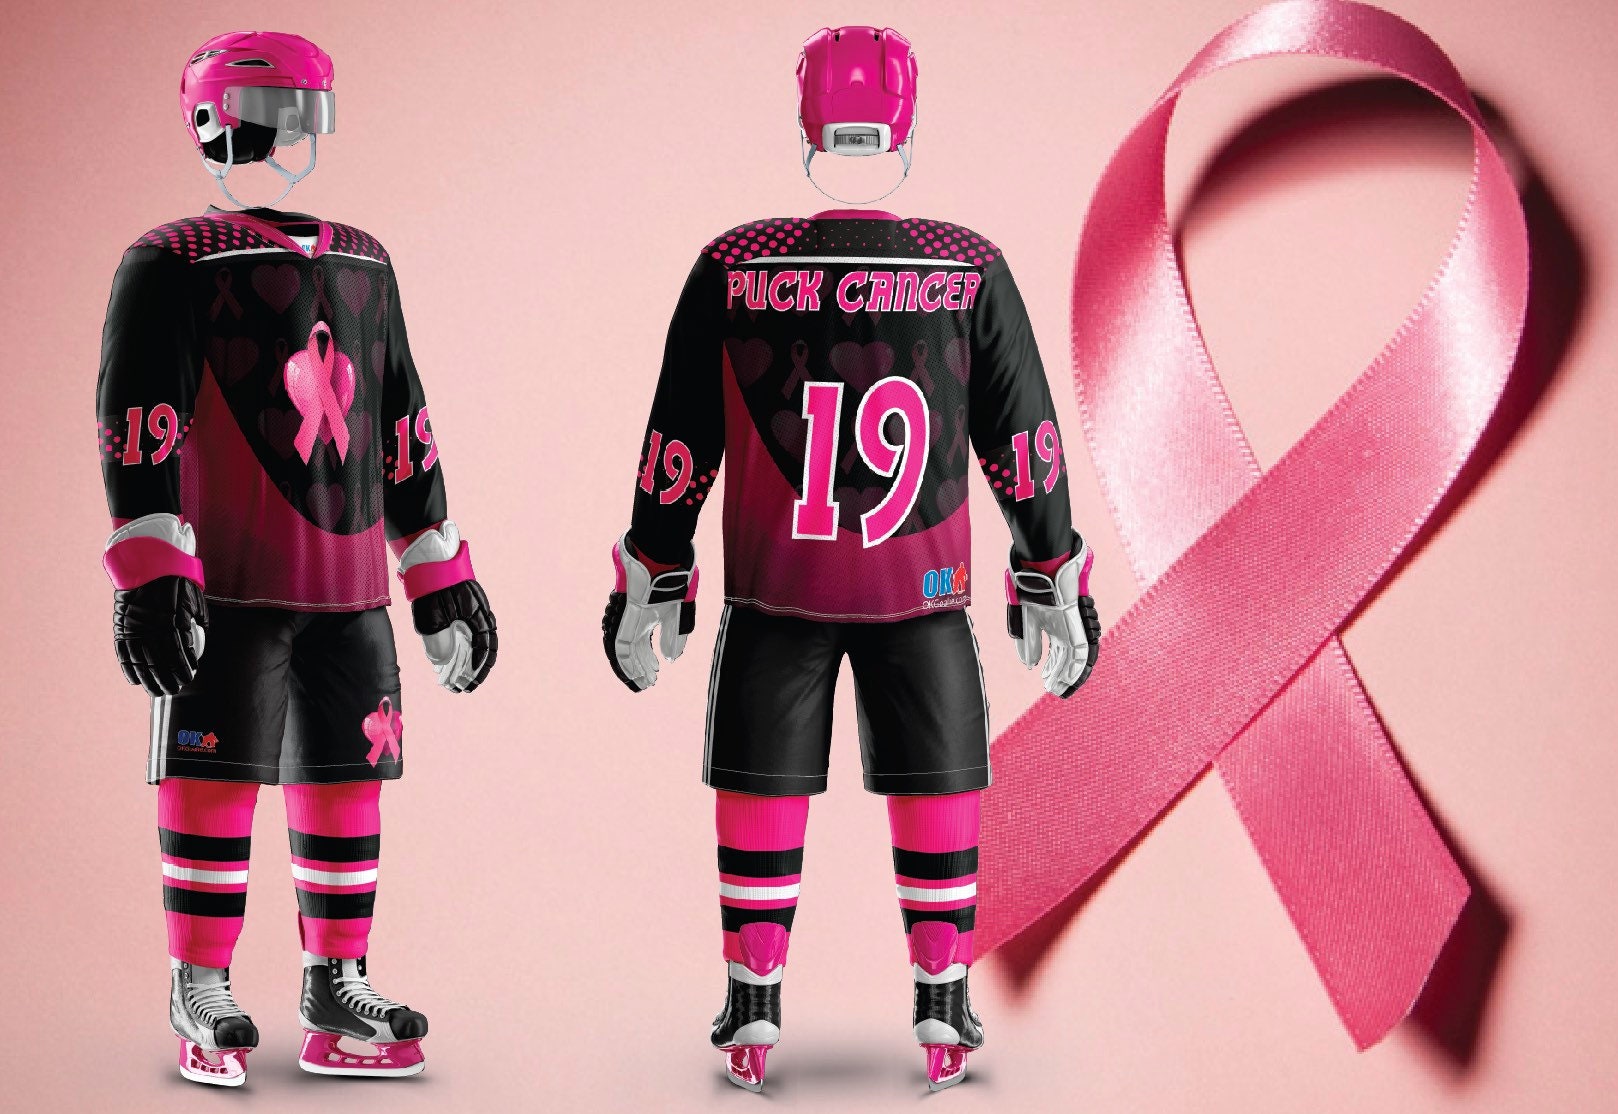 Chicago Blackhawks Breast Cancer Awareness Pink Stitched Unisex